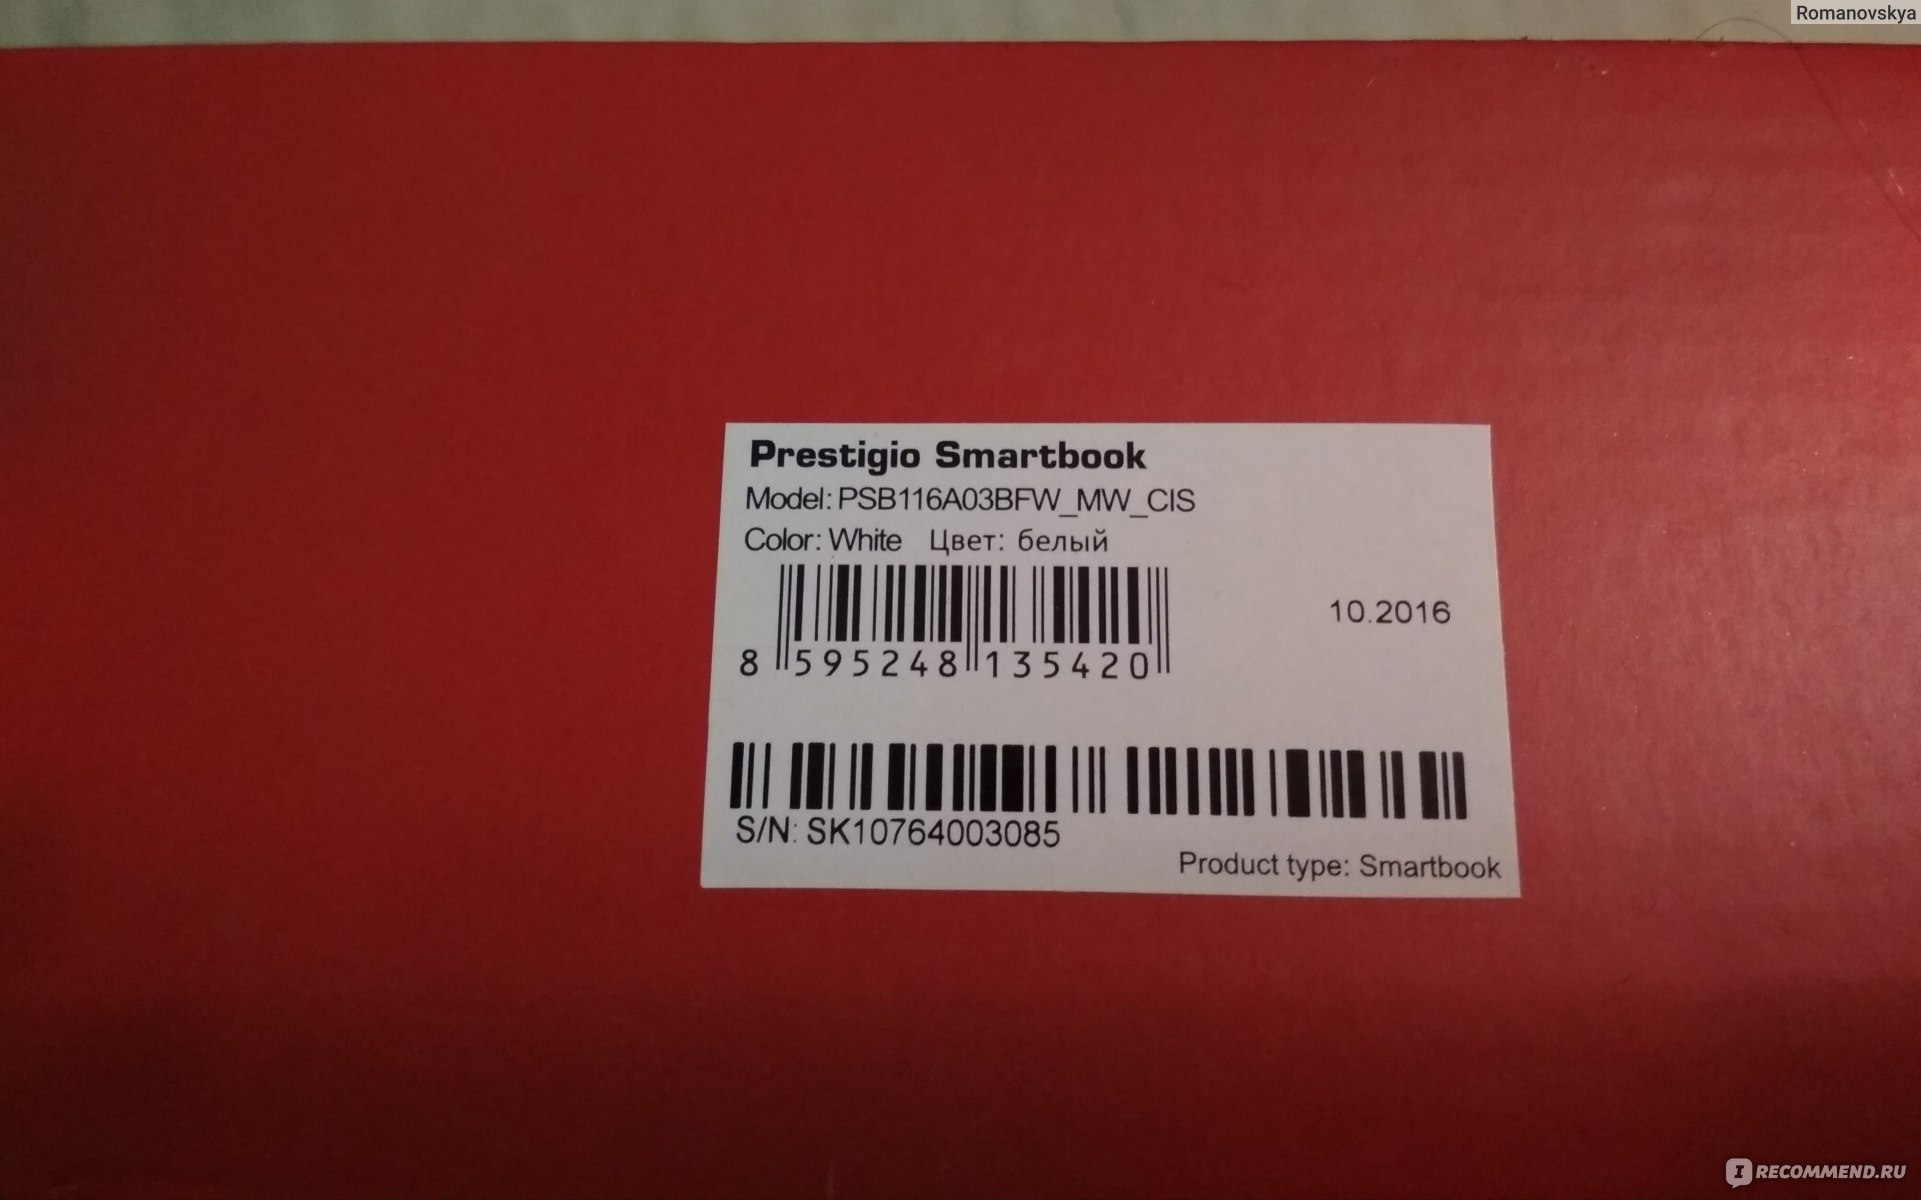 Купить Ноутбук Prestigio Smartbook 116a03 Psb116a03bfw_Mw_Cis